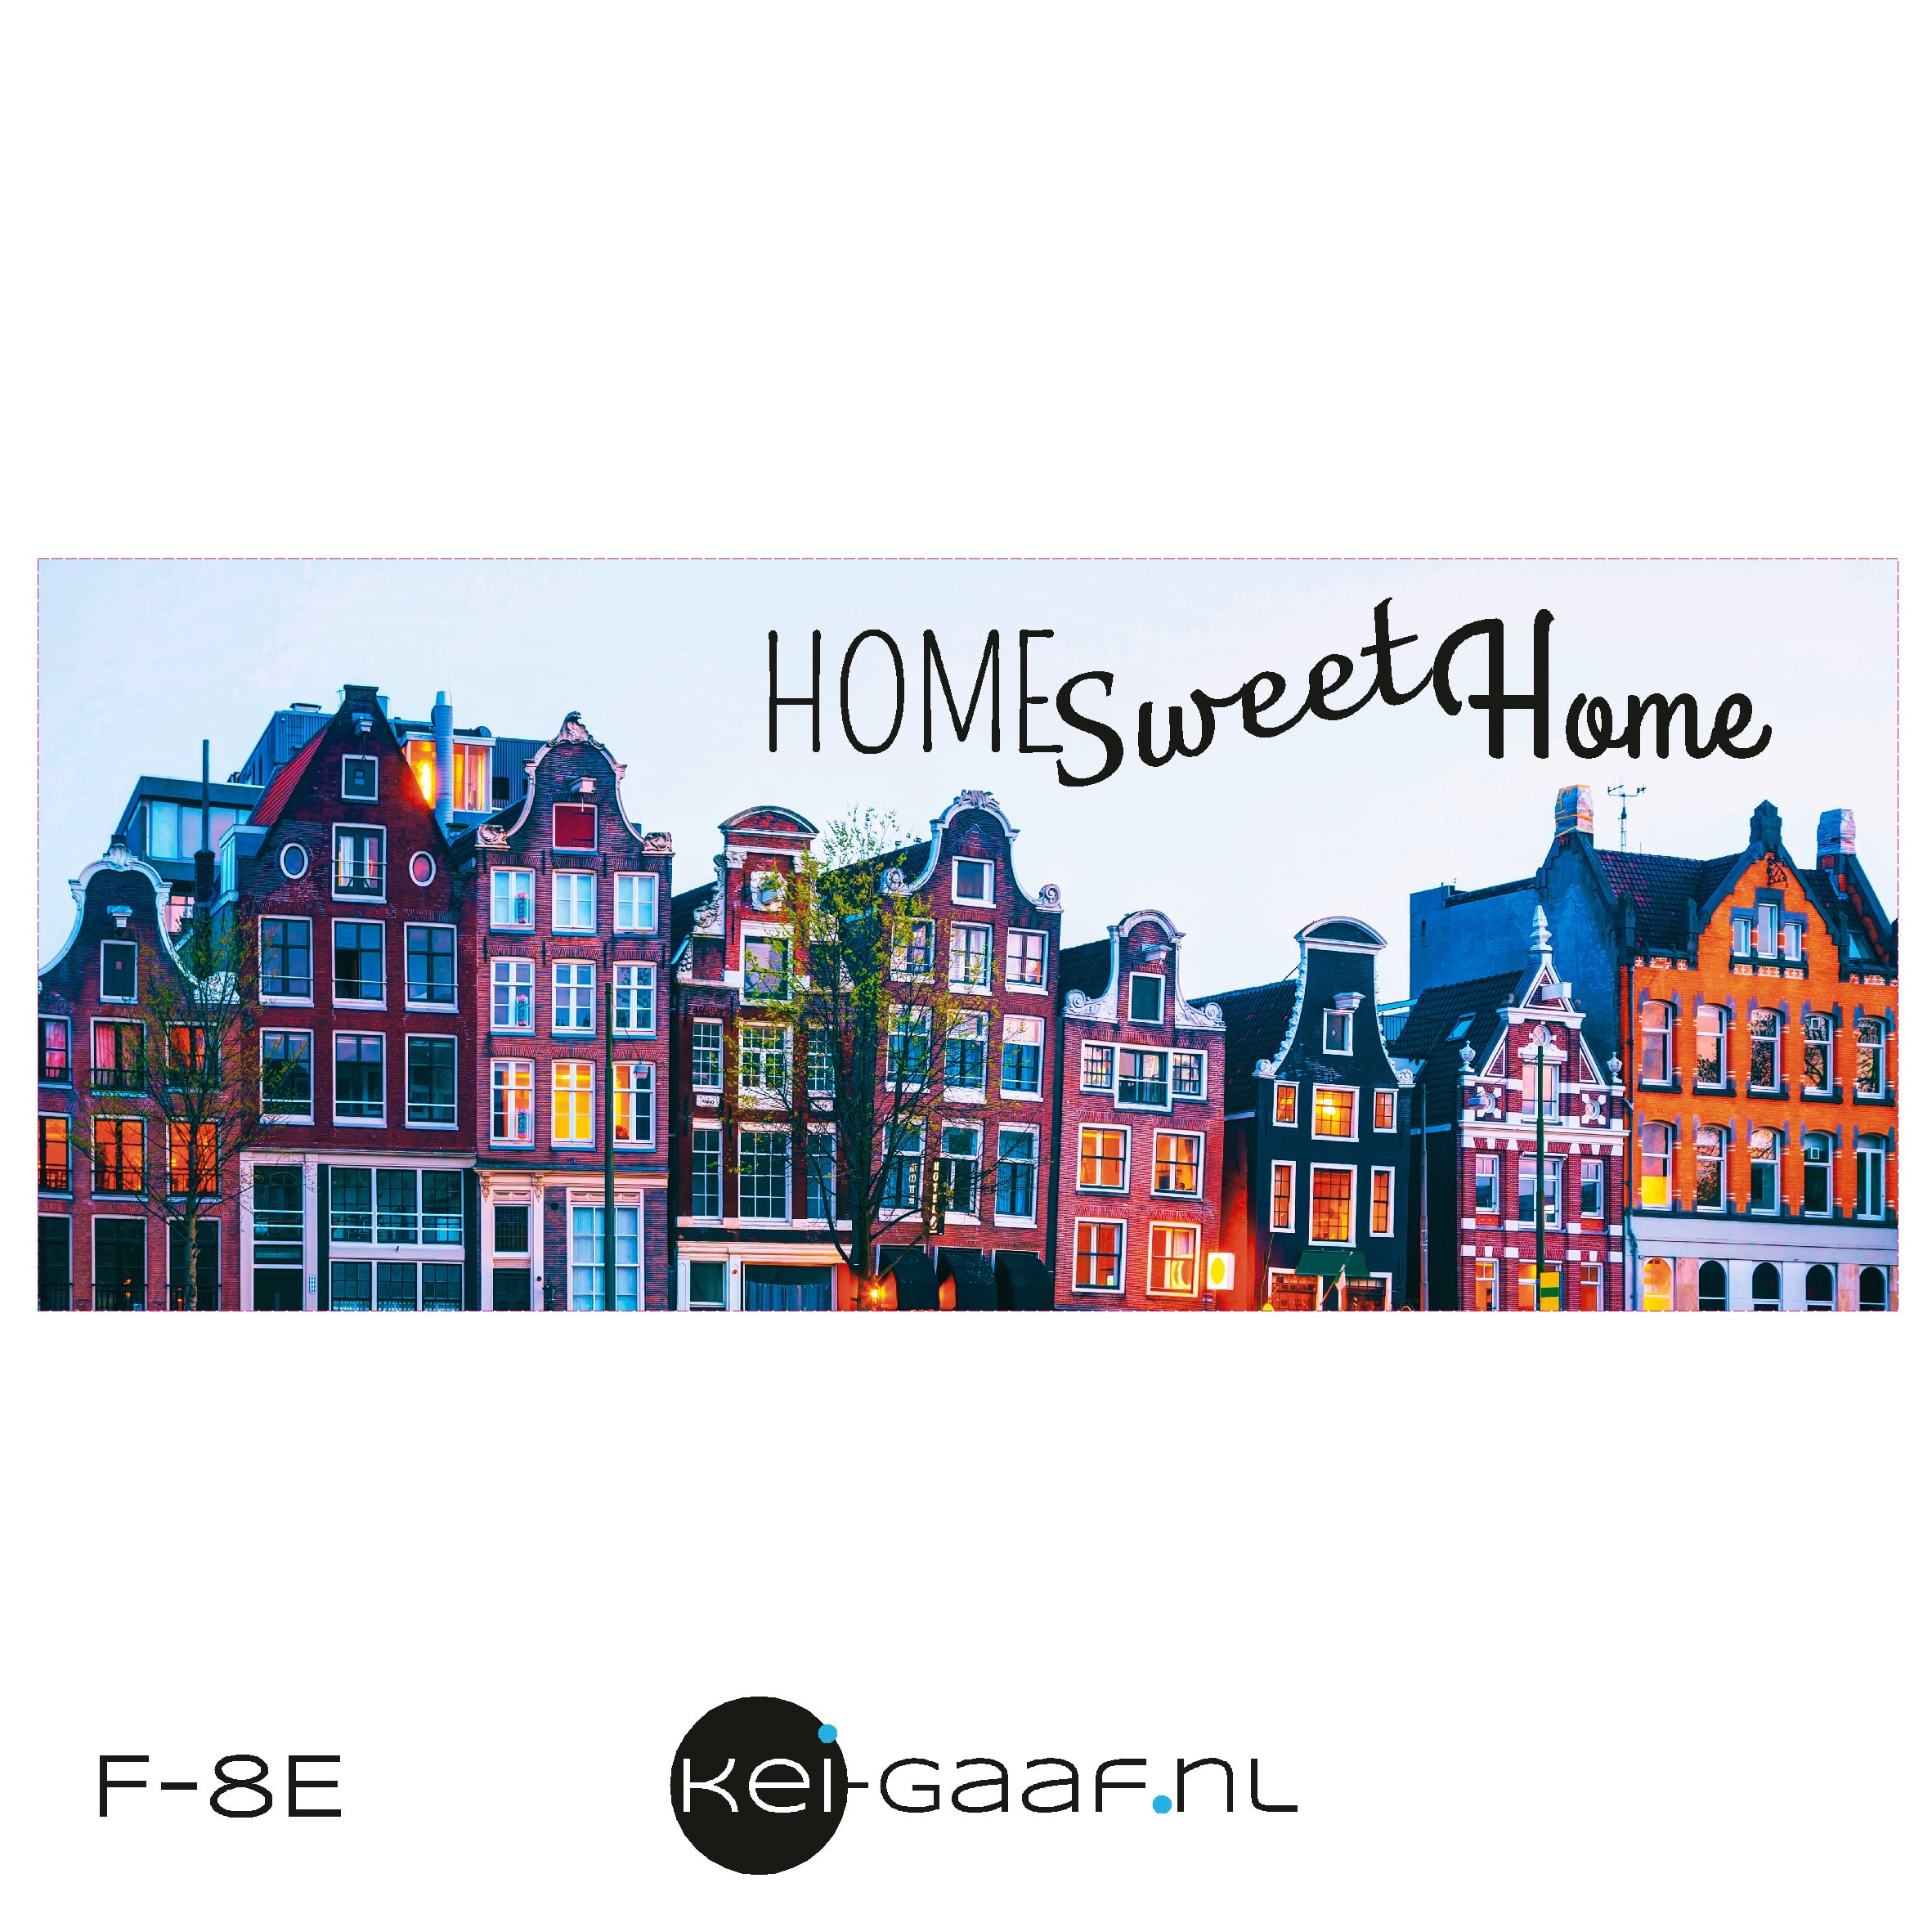 Accumulatie methodologie onthouden Raamfolie privacy full colour keuken Amsterdam 8E - Kei-Gaaf